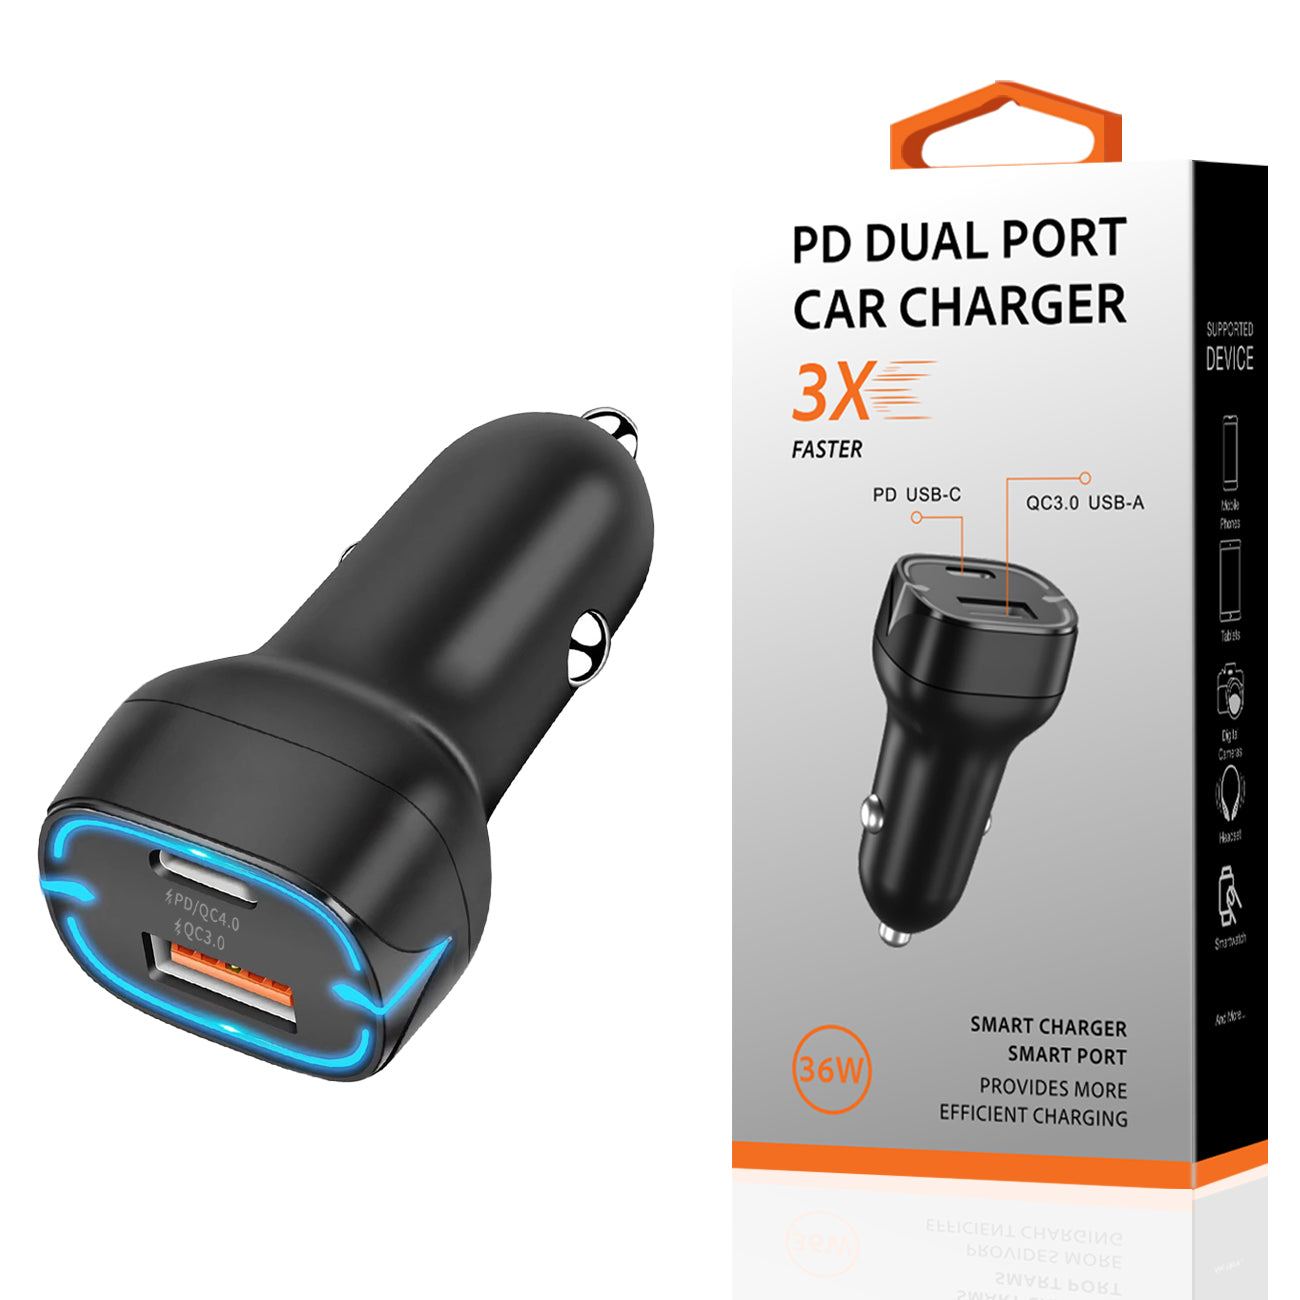 2 Ports USB C Car Charger Super Fast Charging PD 18W+QC3.0 per port